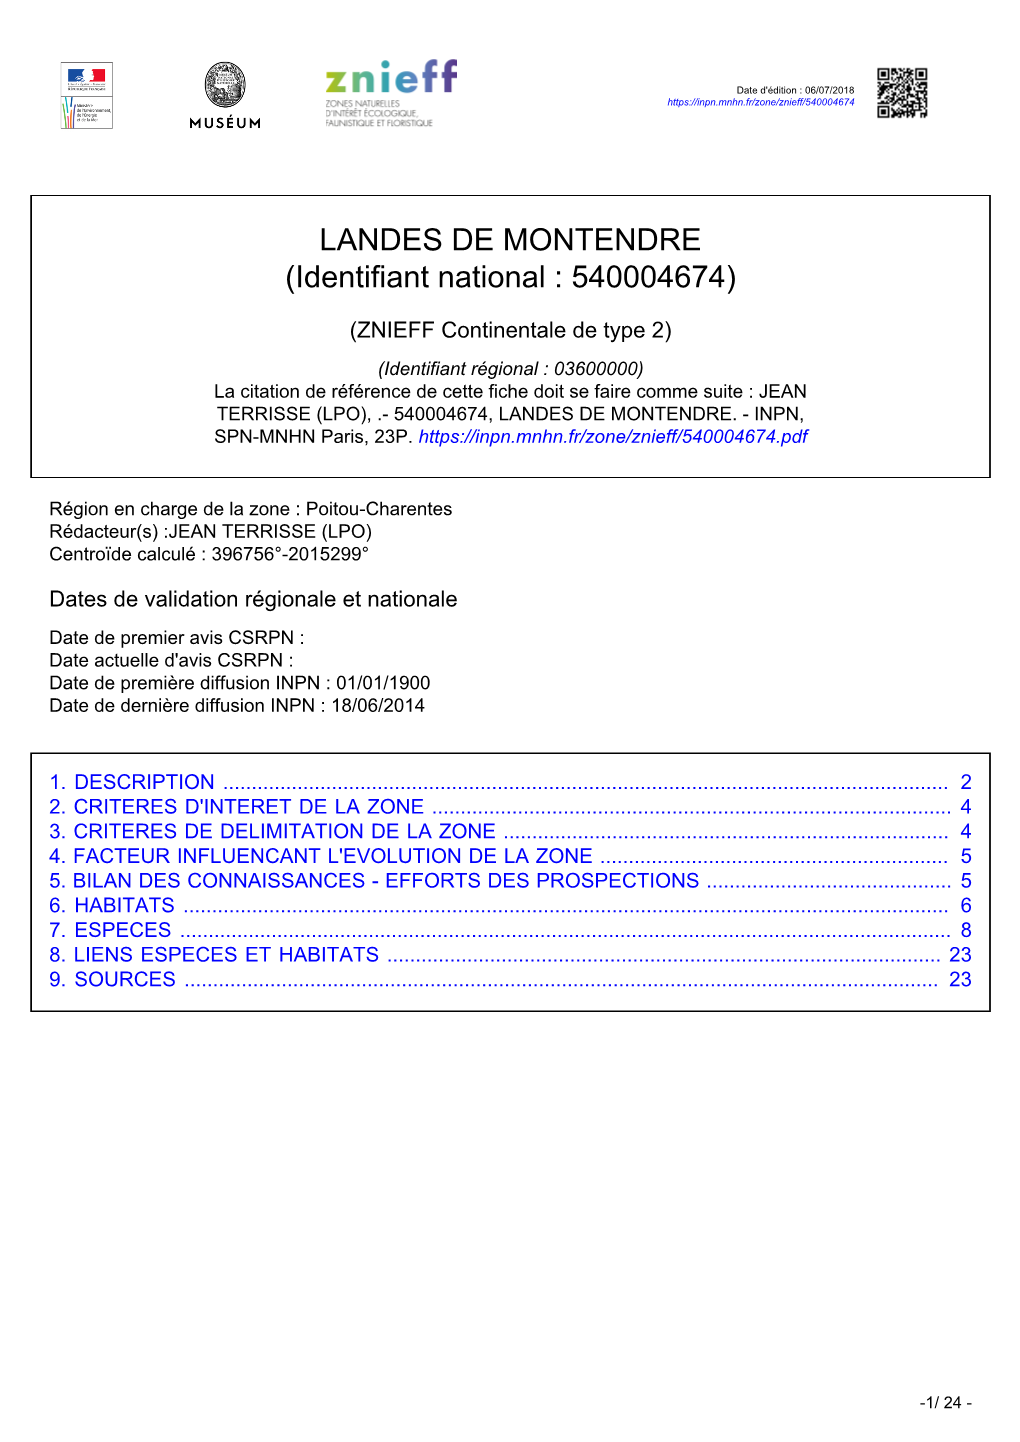 LANDES DE MONTENDRE (Identifiant National : 540004674)